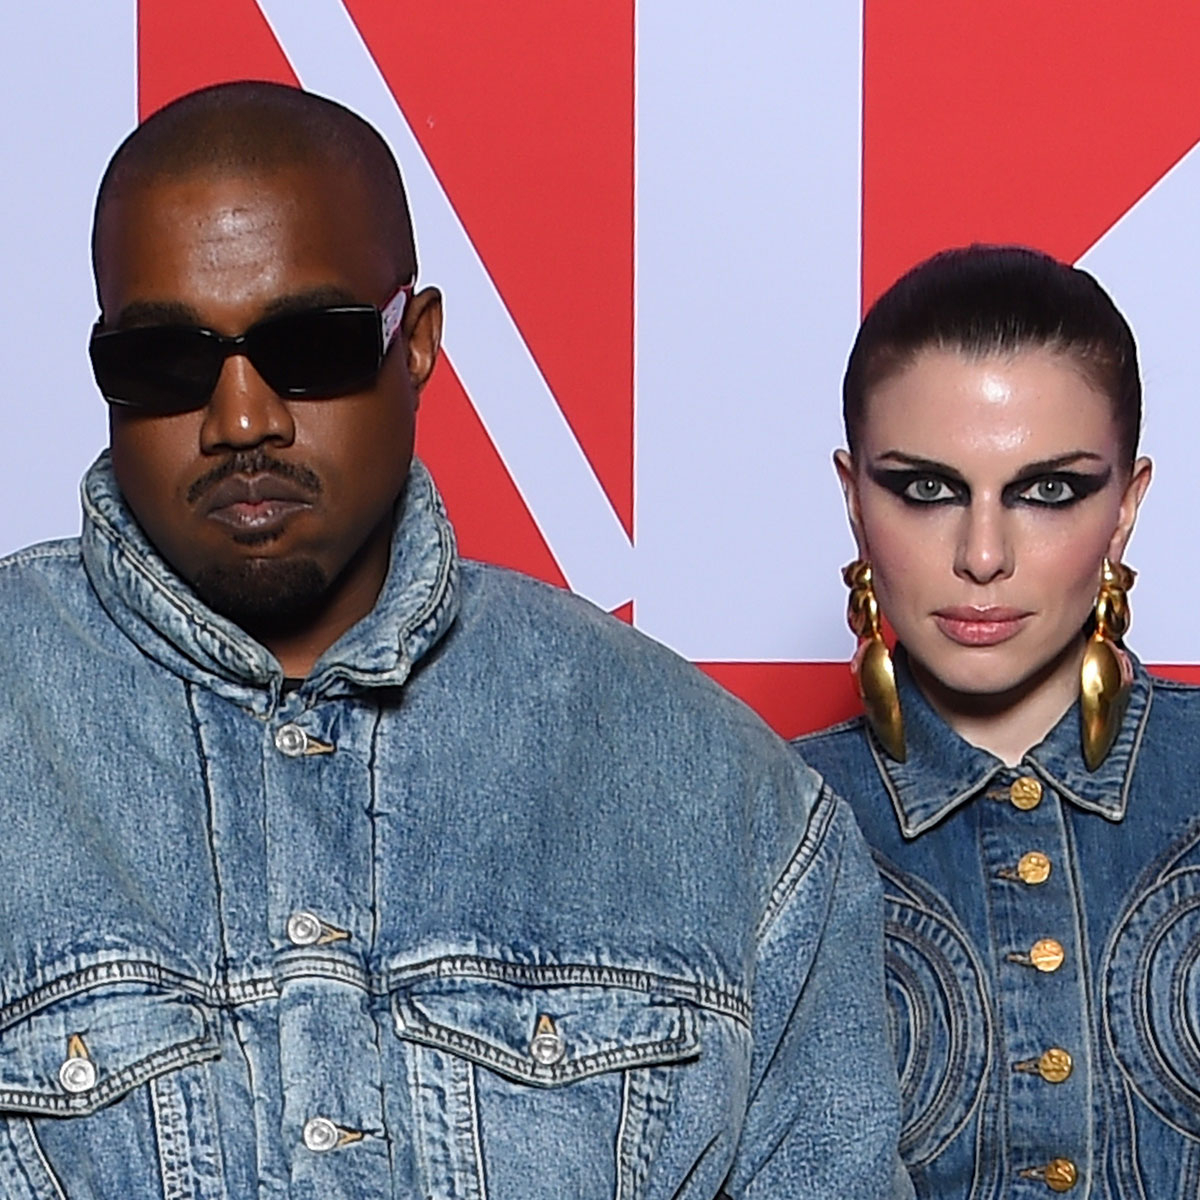 Julia Fox Alleges Kanye West “Weaponized” Her Against Kim Kardashian